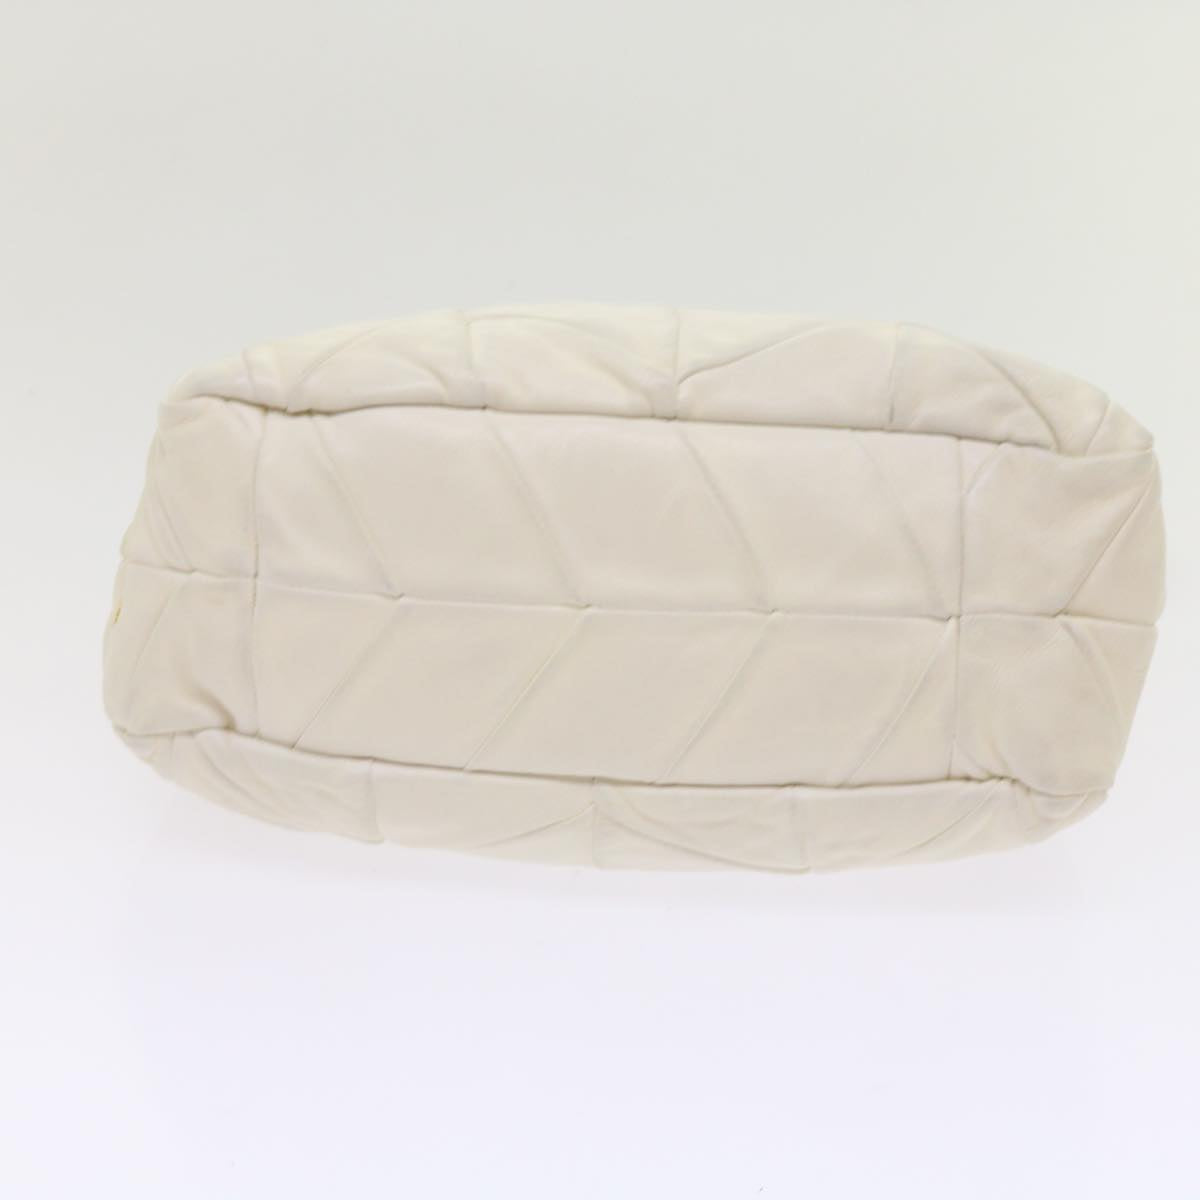 Miu Miu Hand Bag Leather 2way White Auth 65057